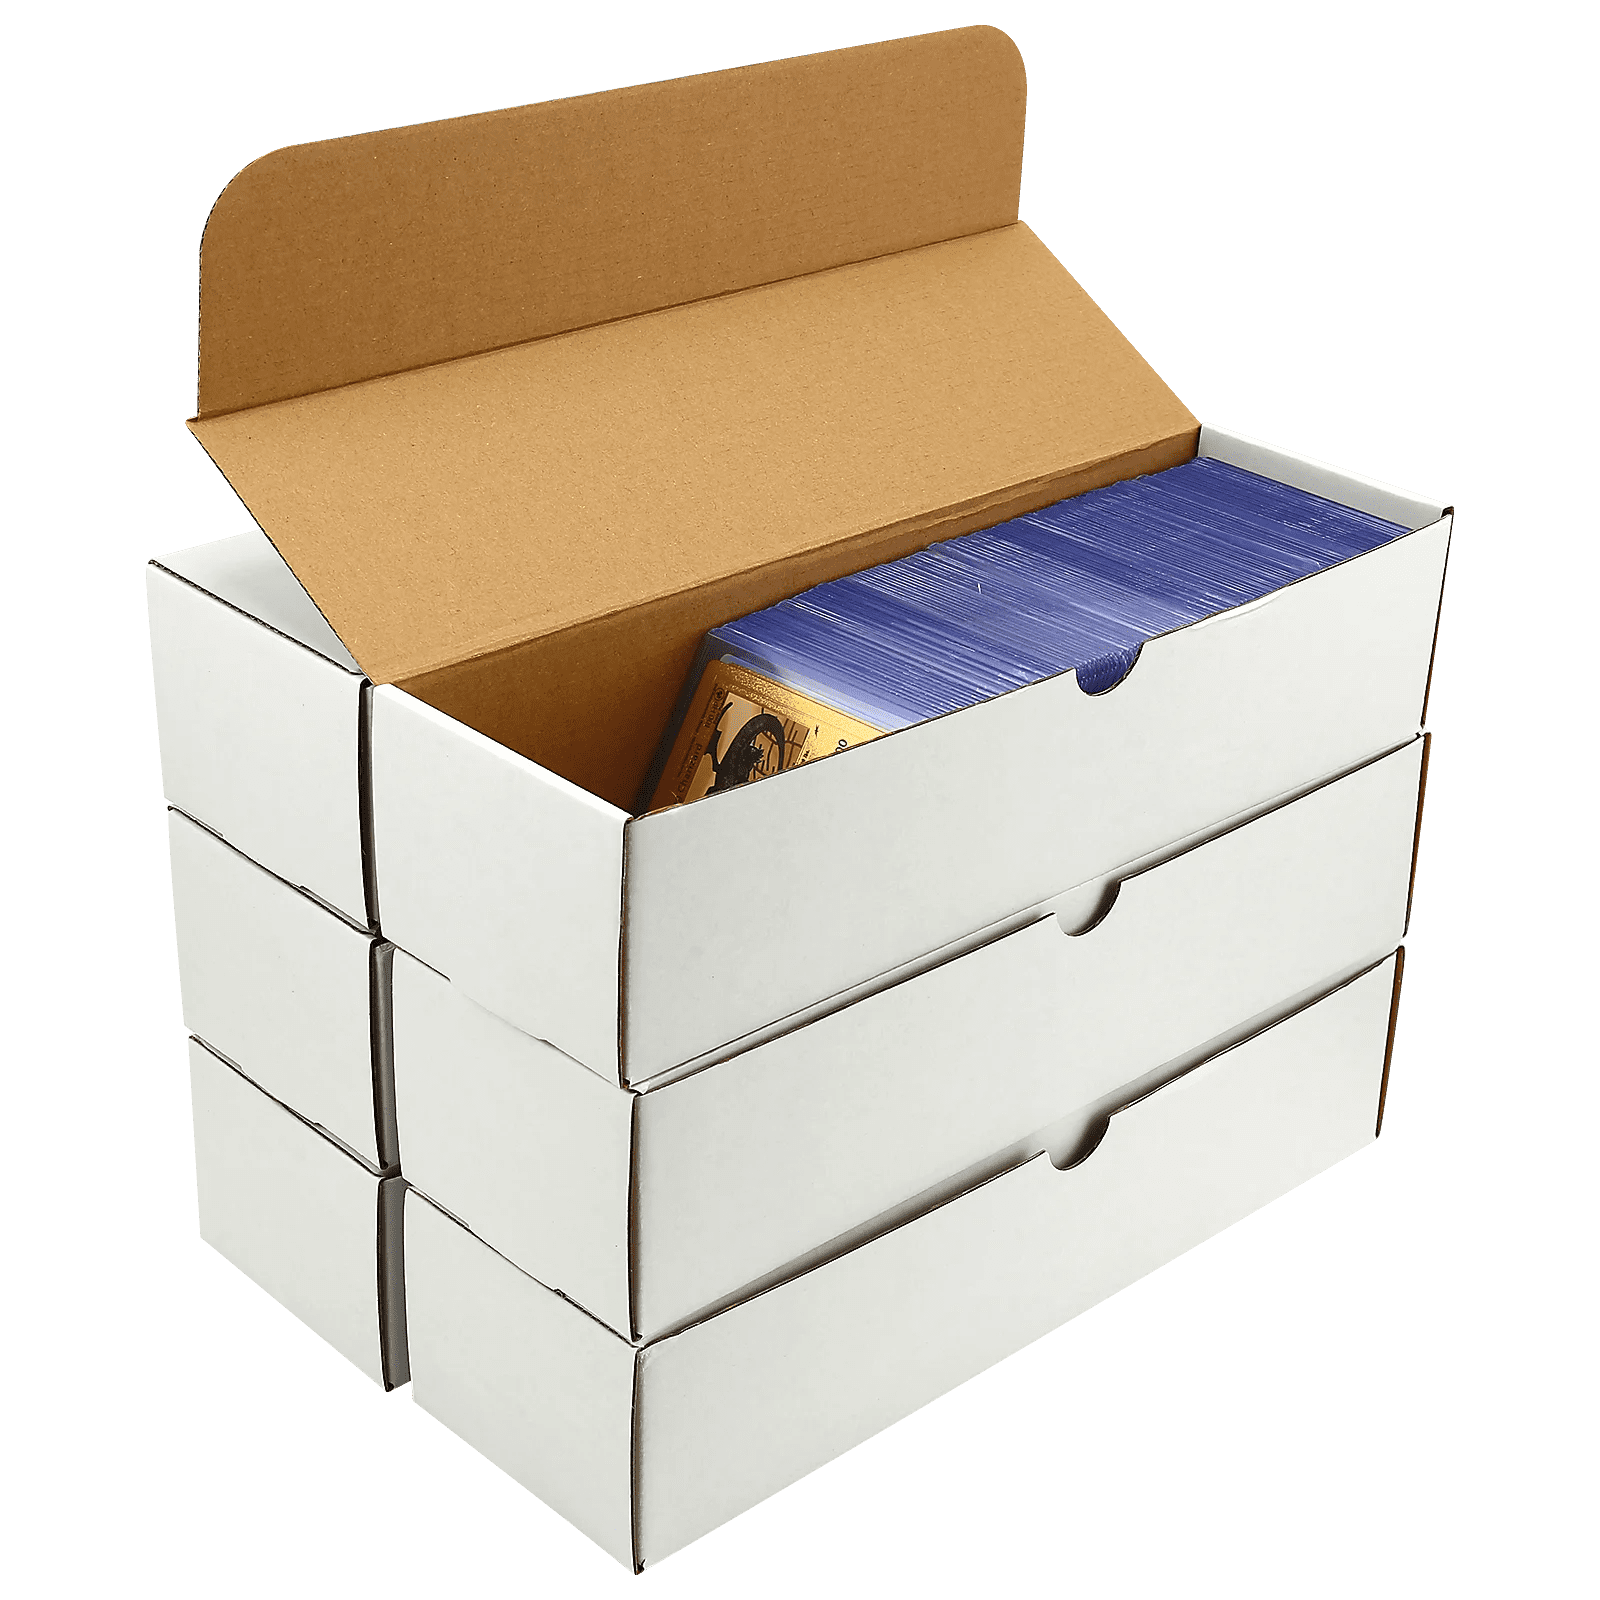 BIU-BOOM Cardboard Boxes for Trading Cards,Baseball,Football,Basketball ...